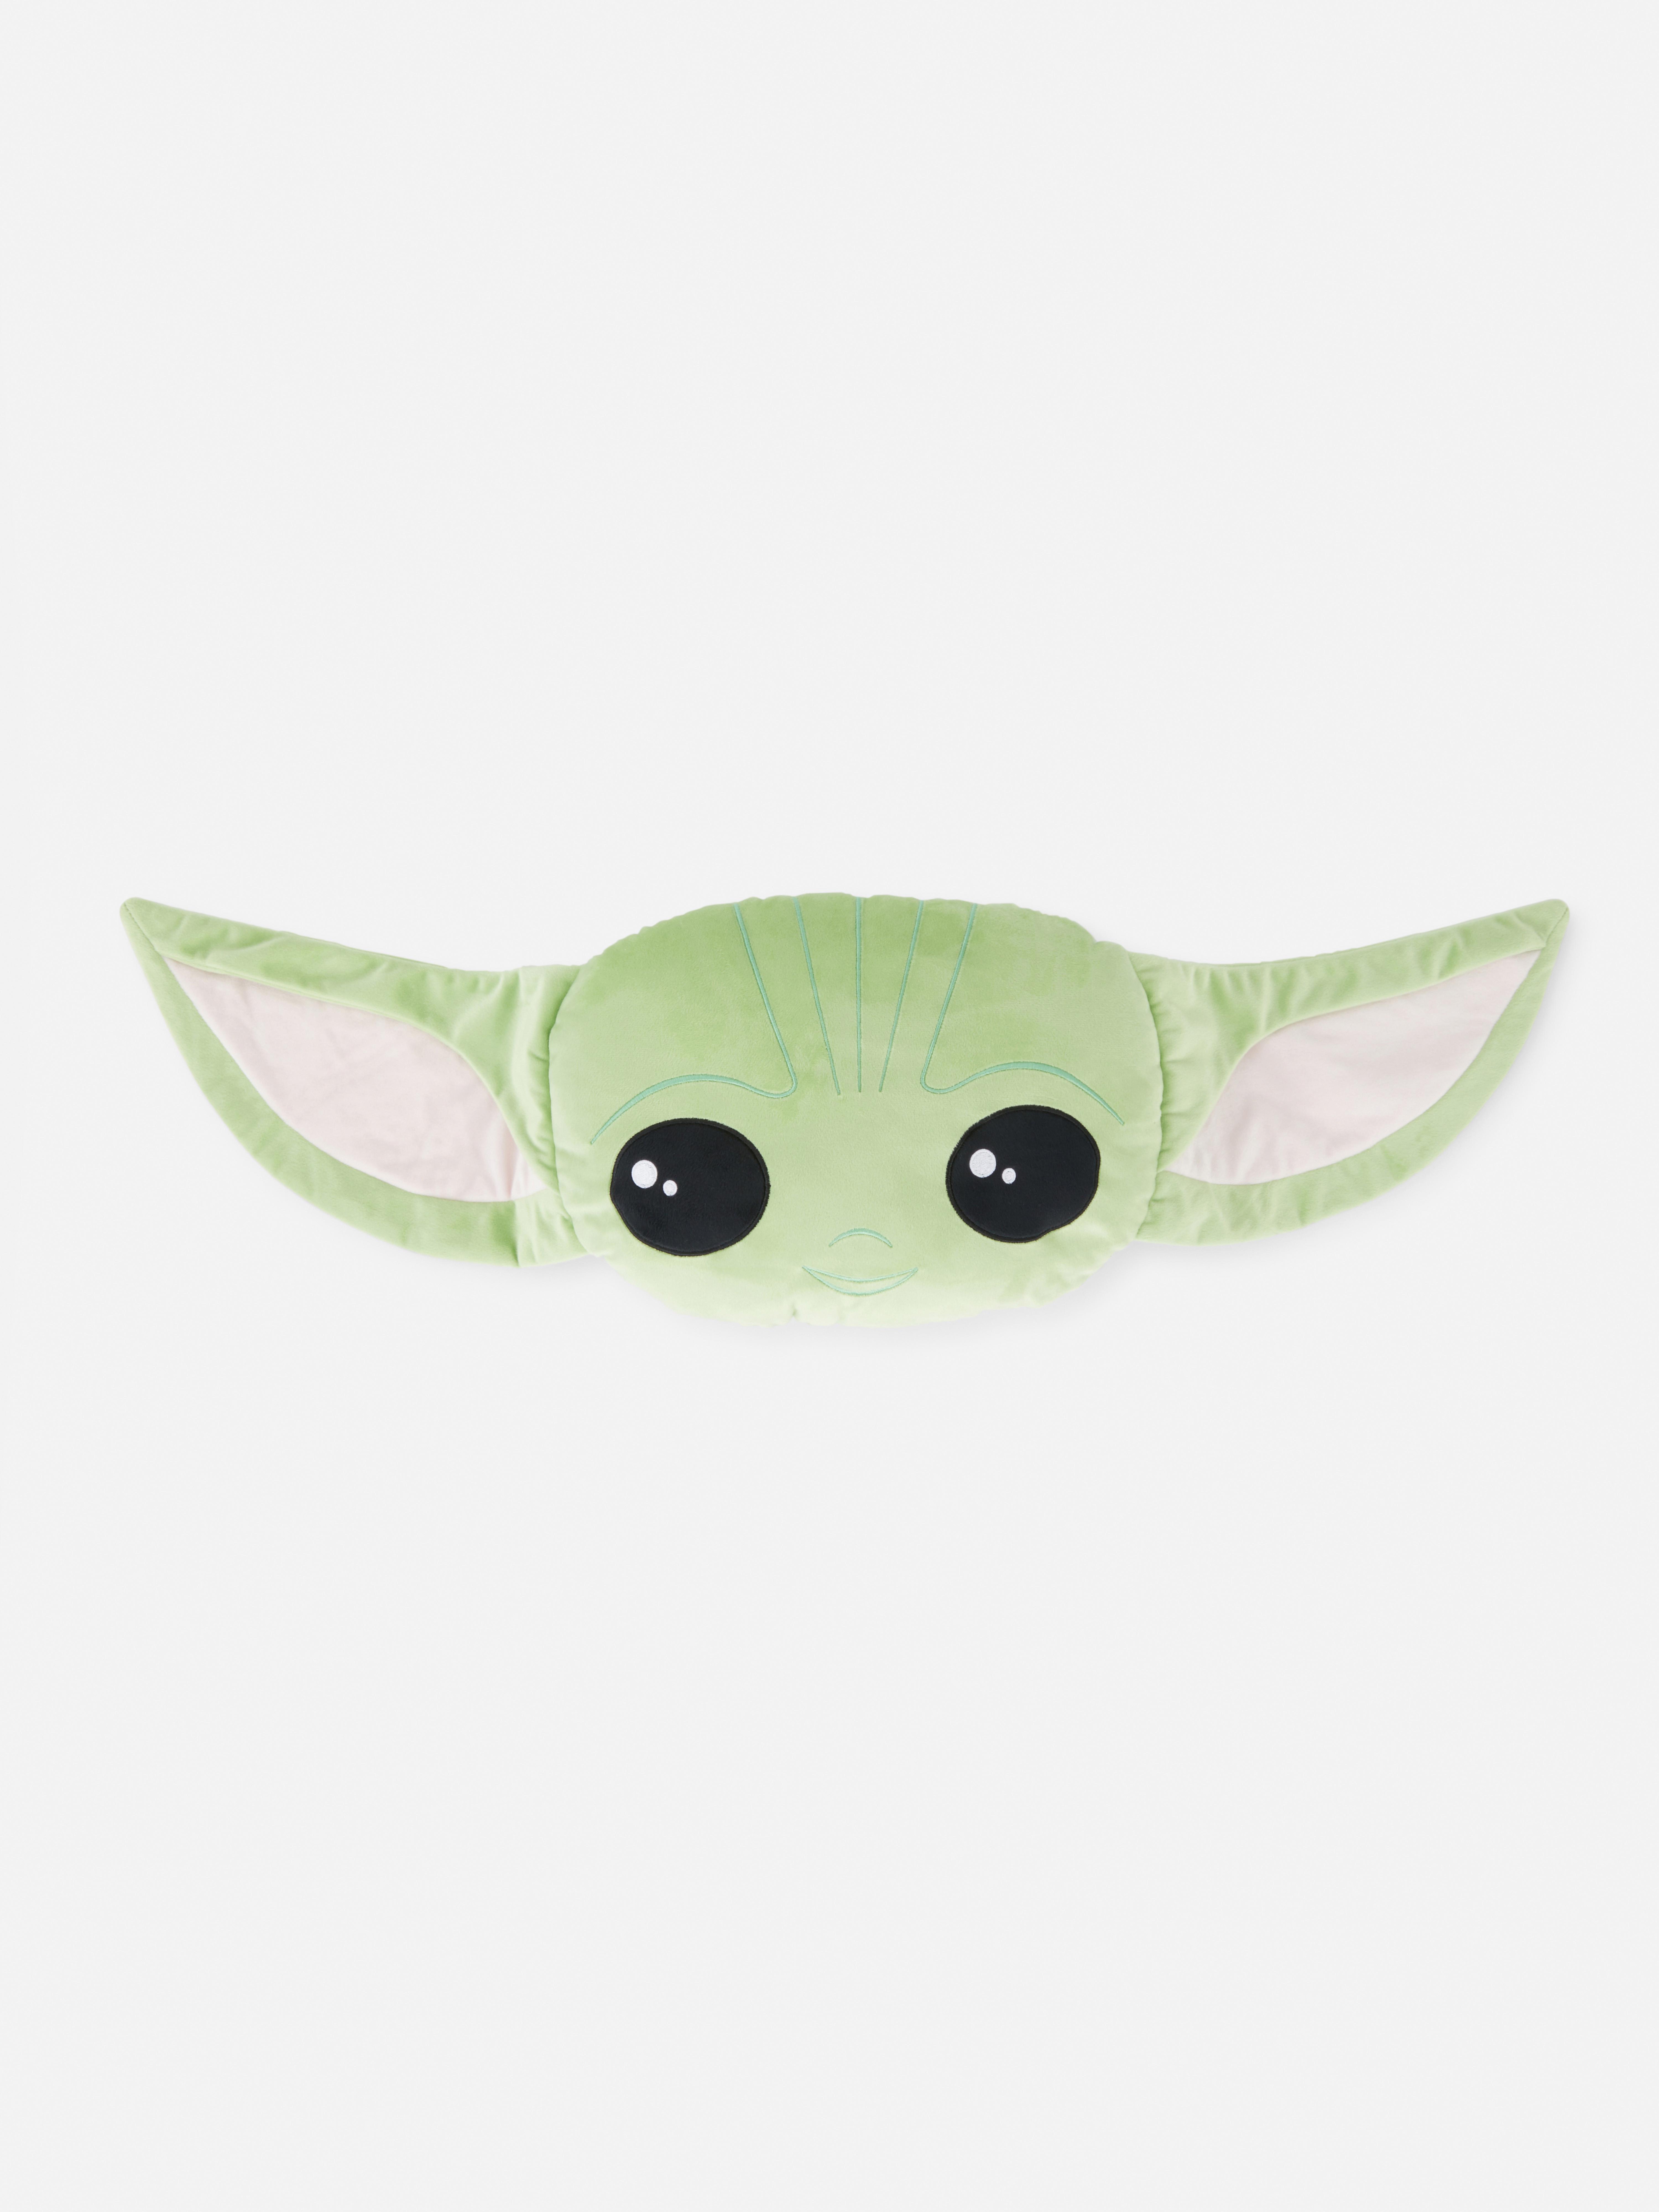 Coussin Star Wars Bébé Yoda